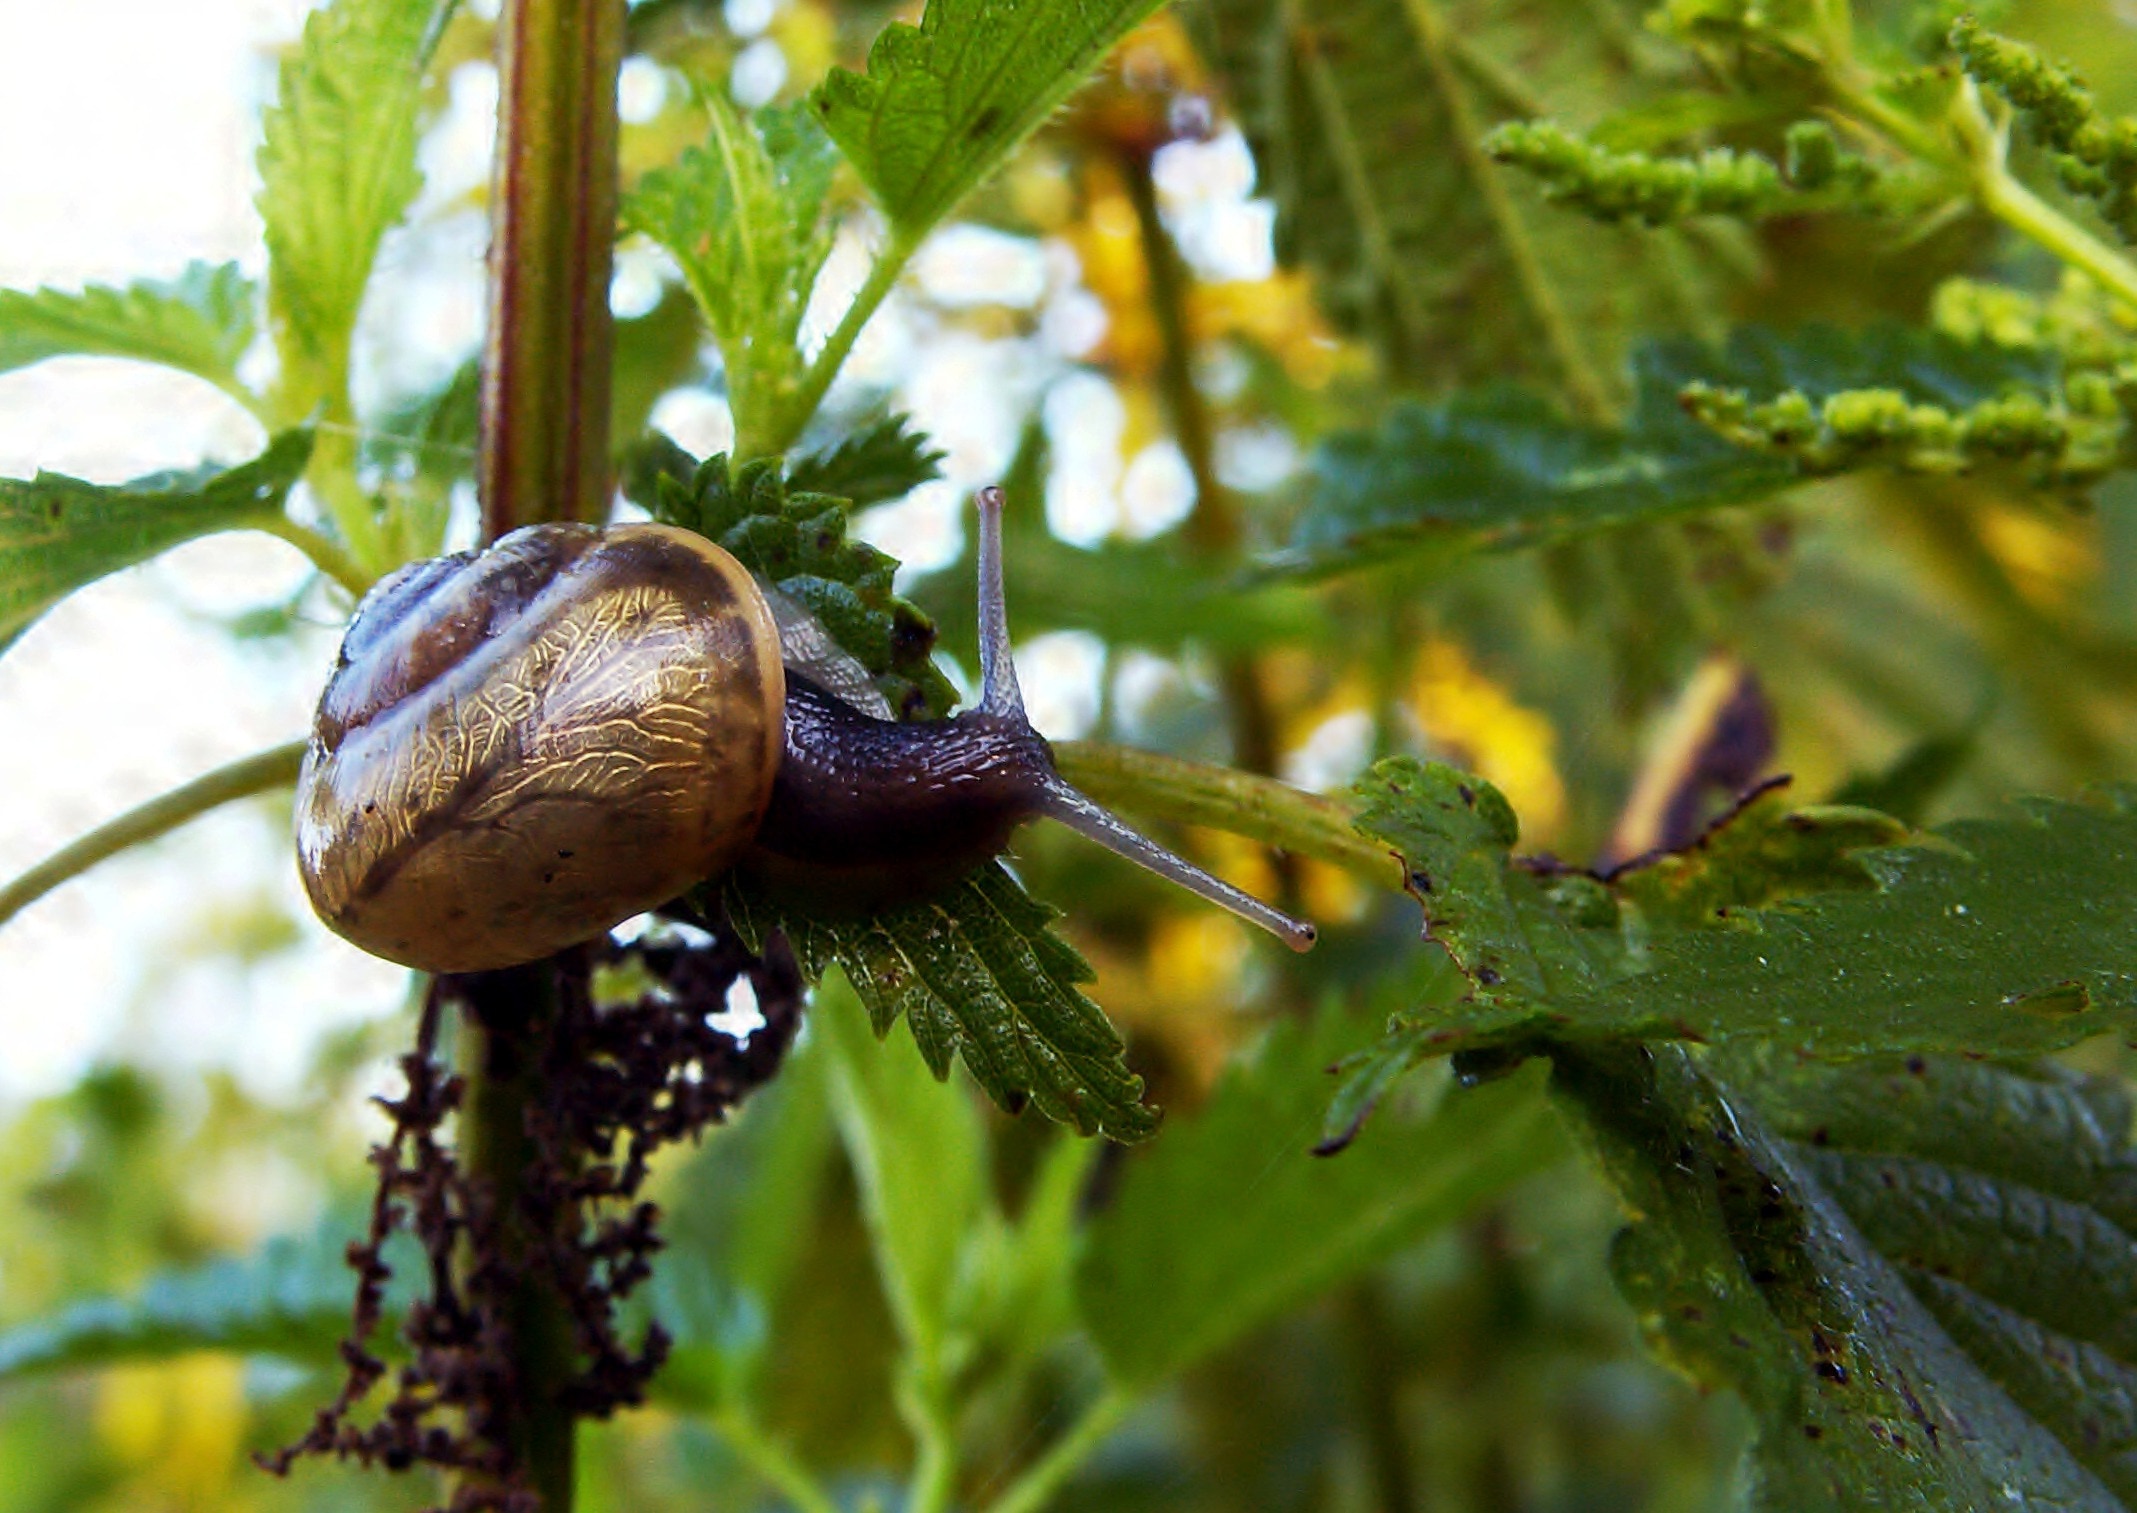 brown shelled snail  eating leaf during daytme